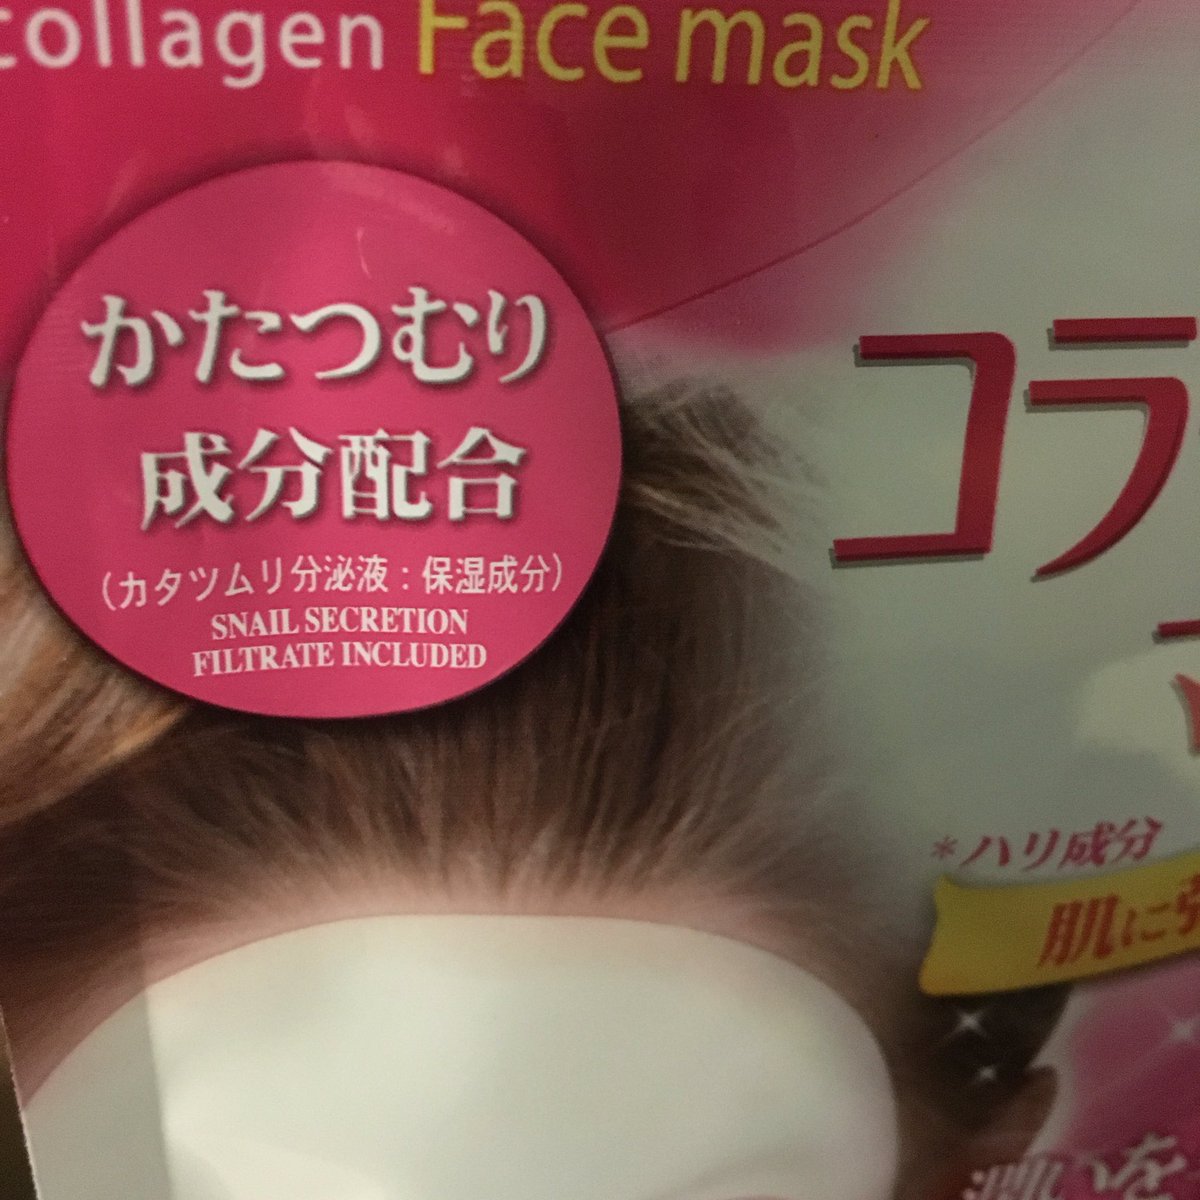 When your face mask includes snail secretions. #inthenameofbeauty #Japan #daiso